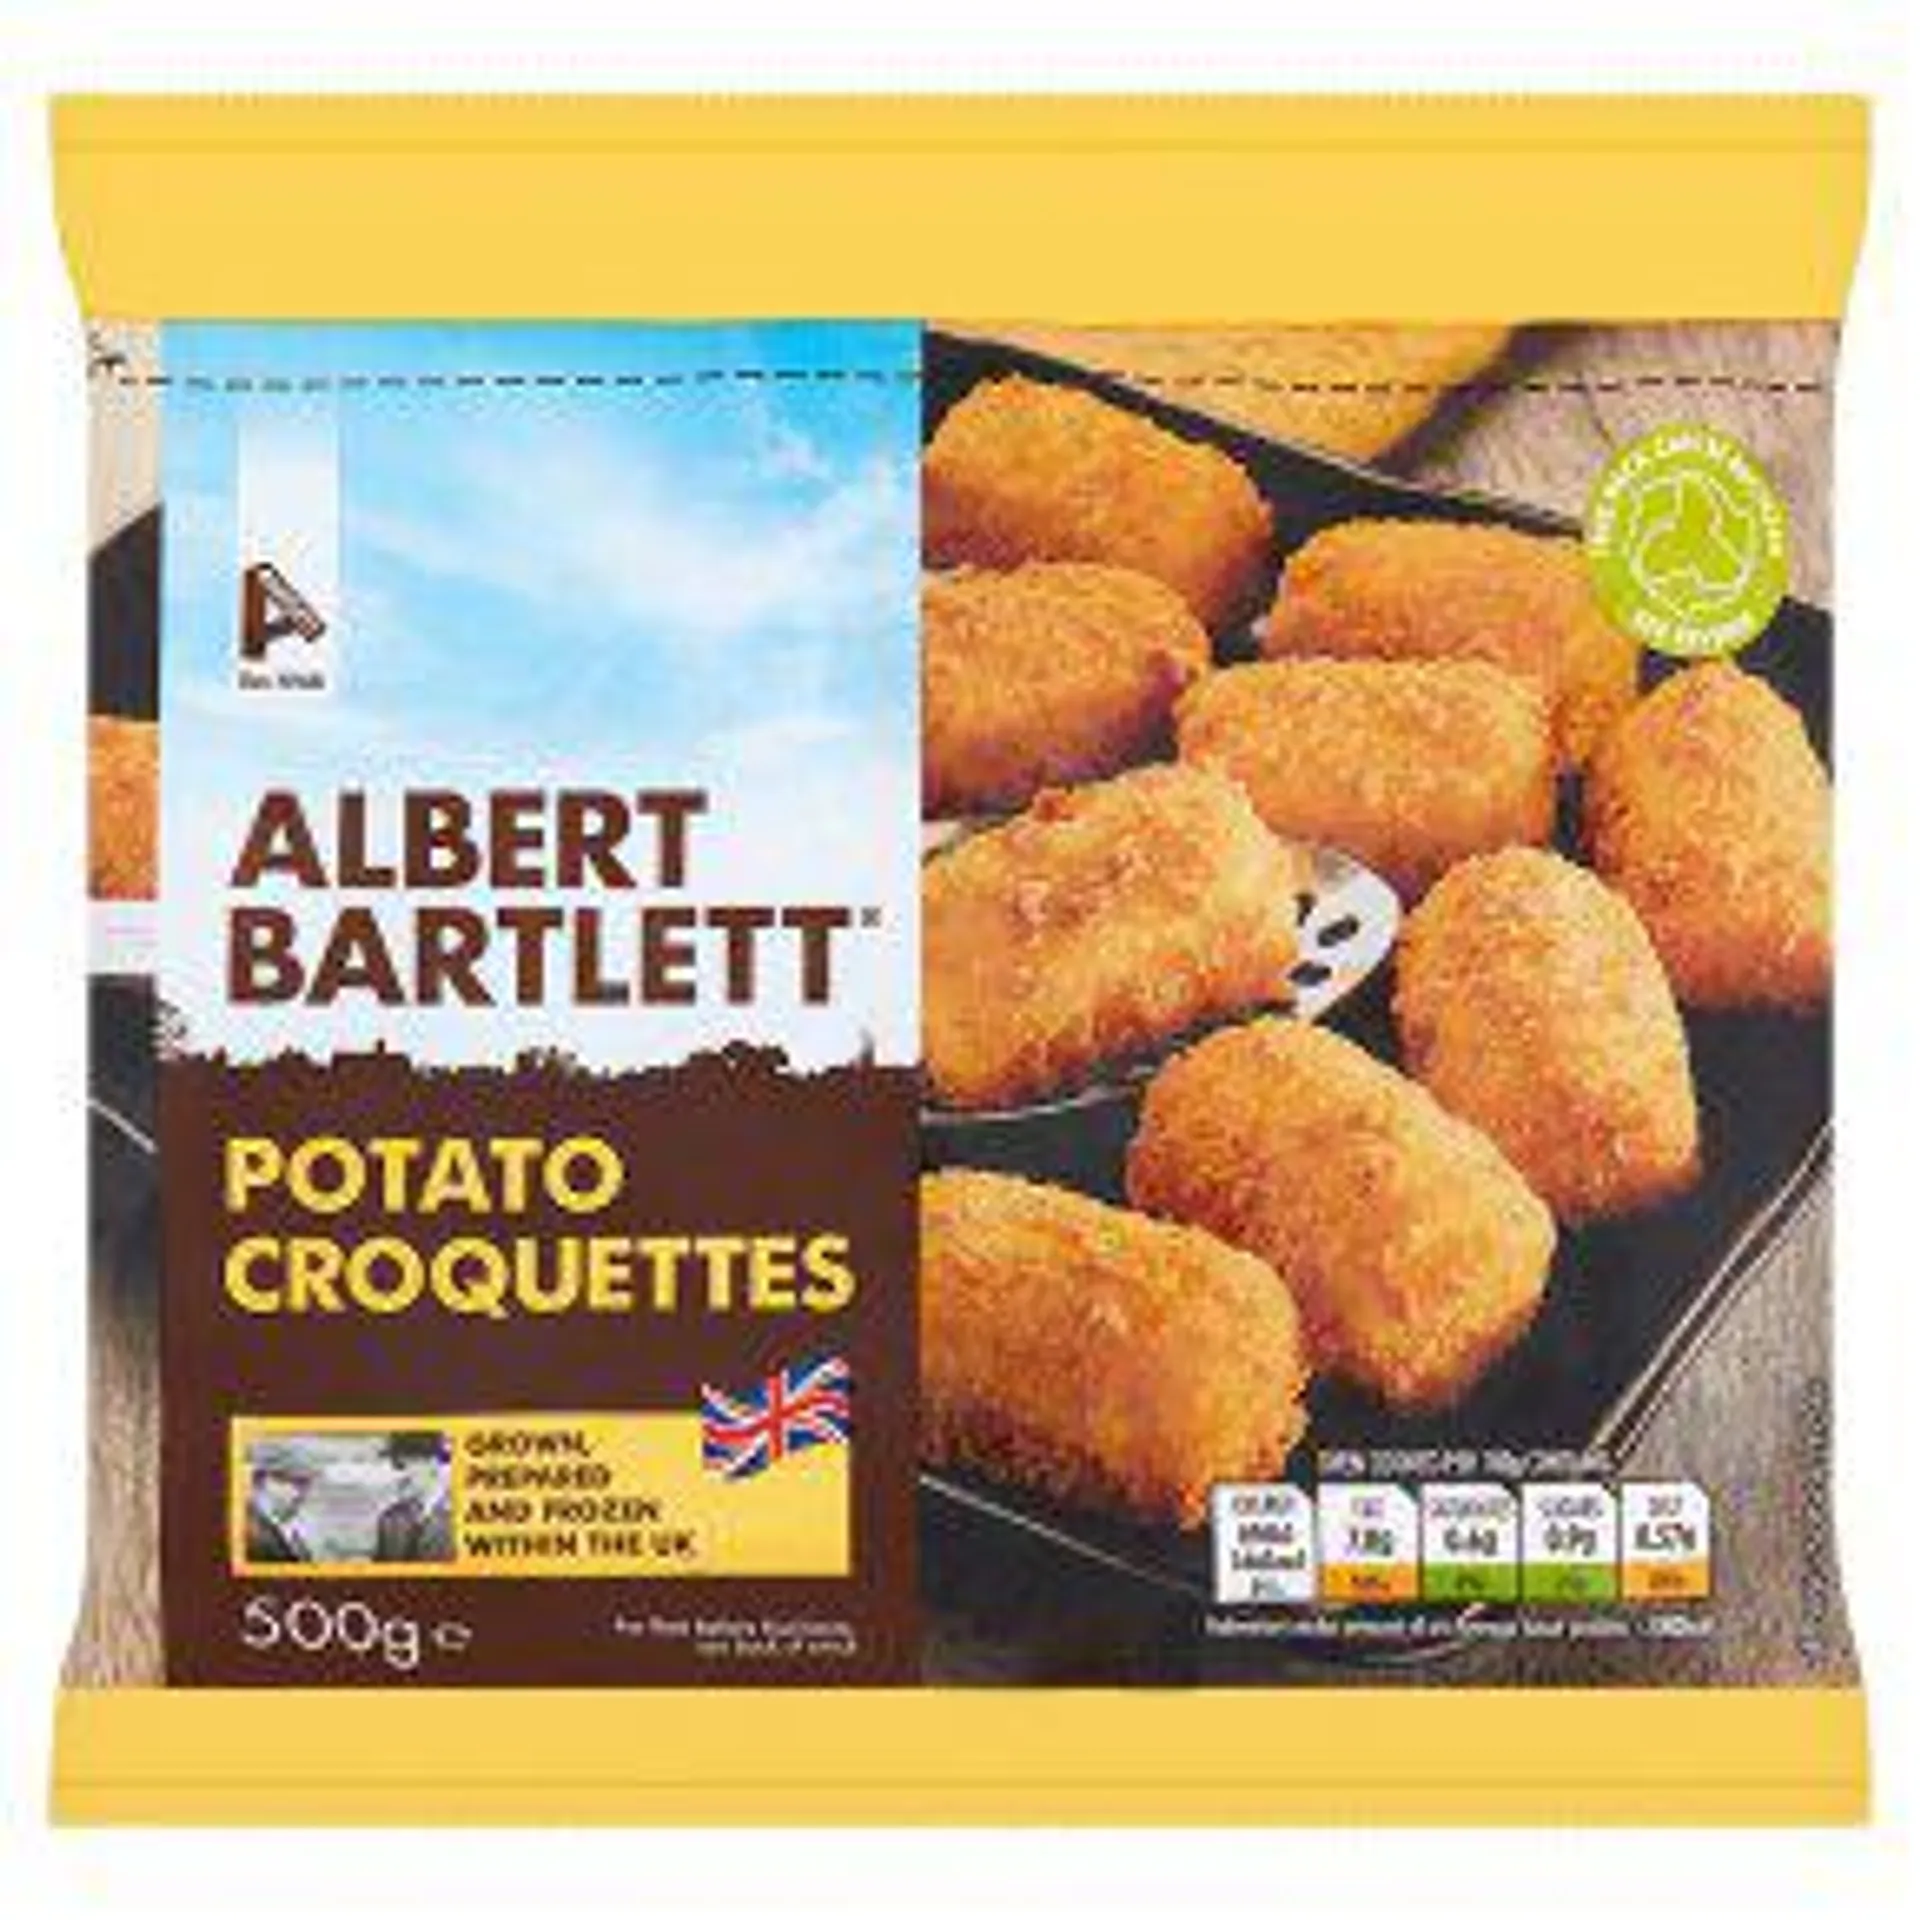 Albert Bartlett Potato Croquettes